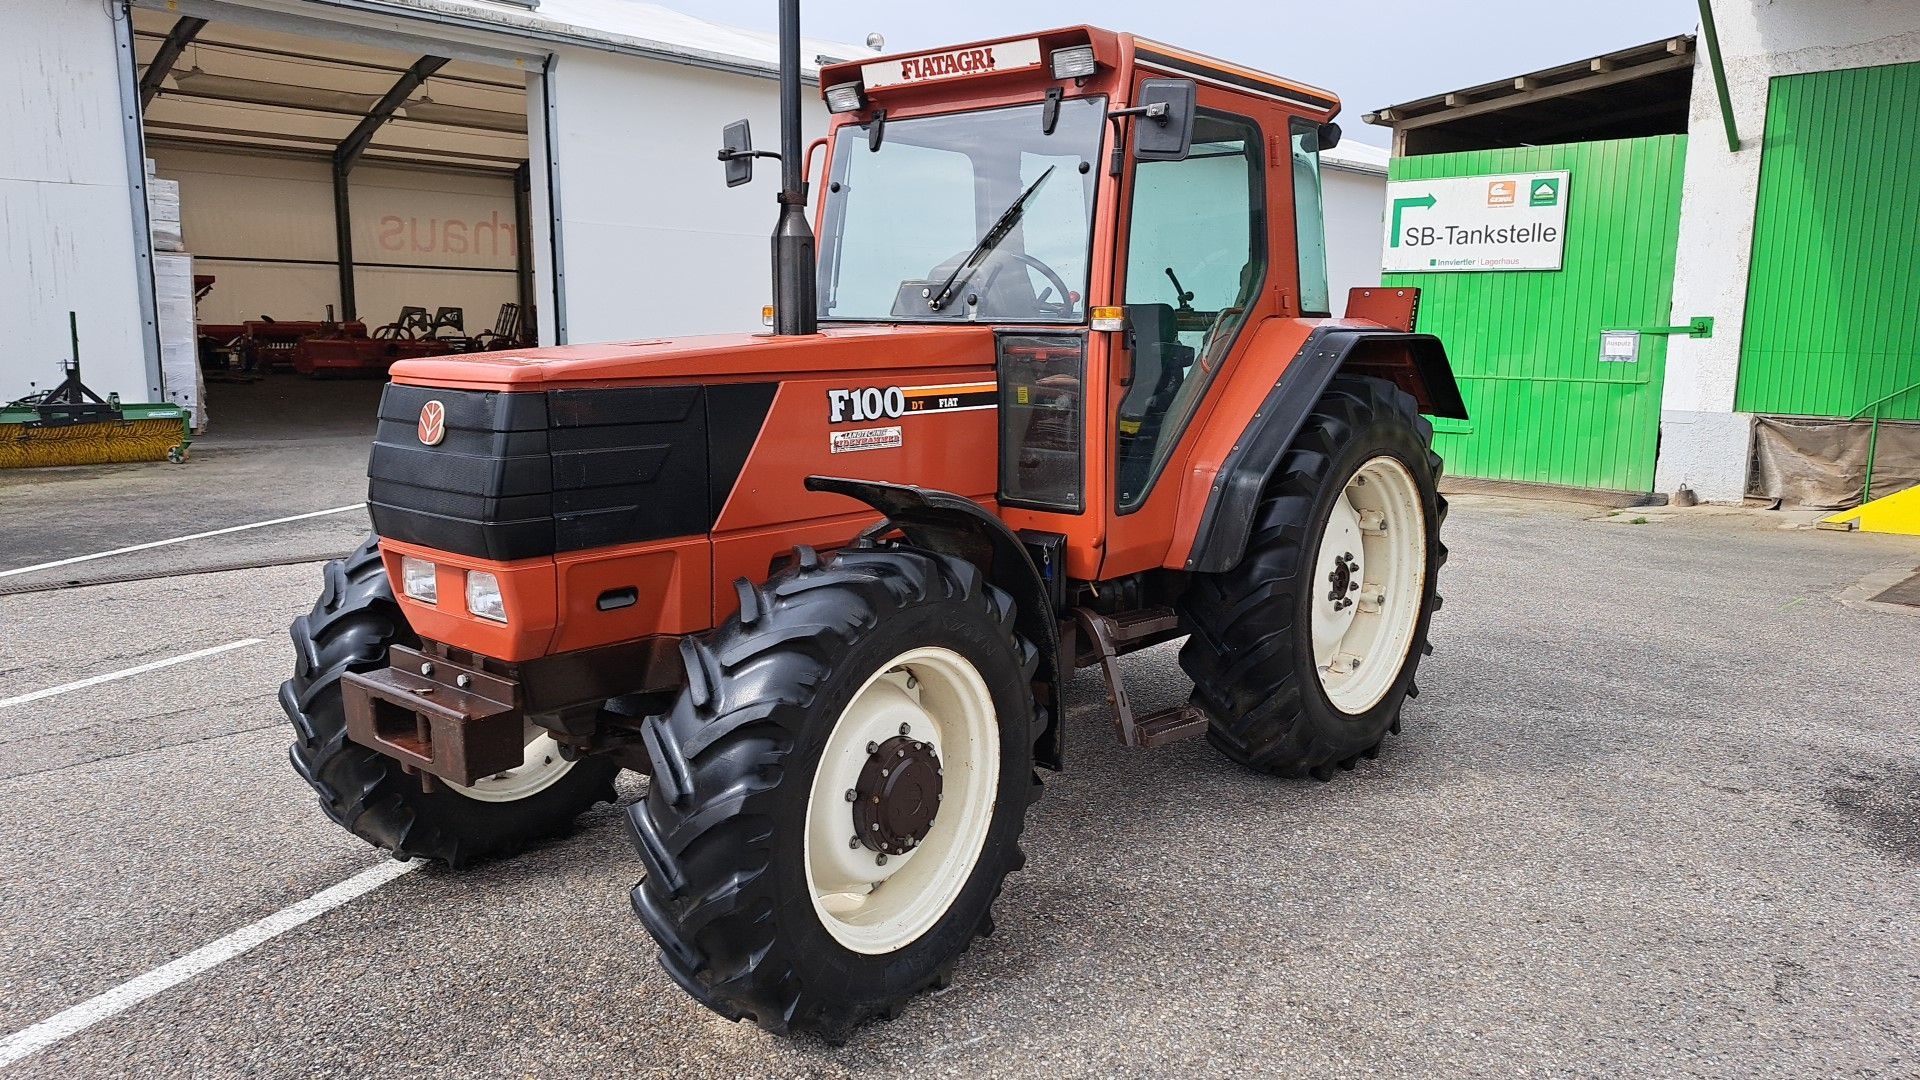 Fiat F100 tractor €24,900